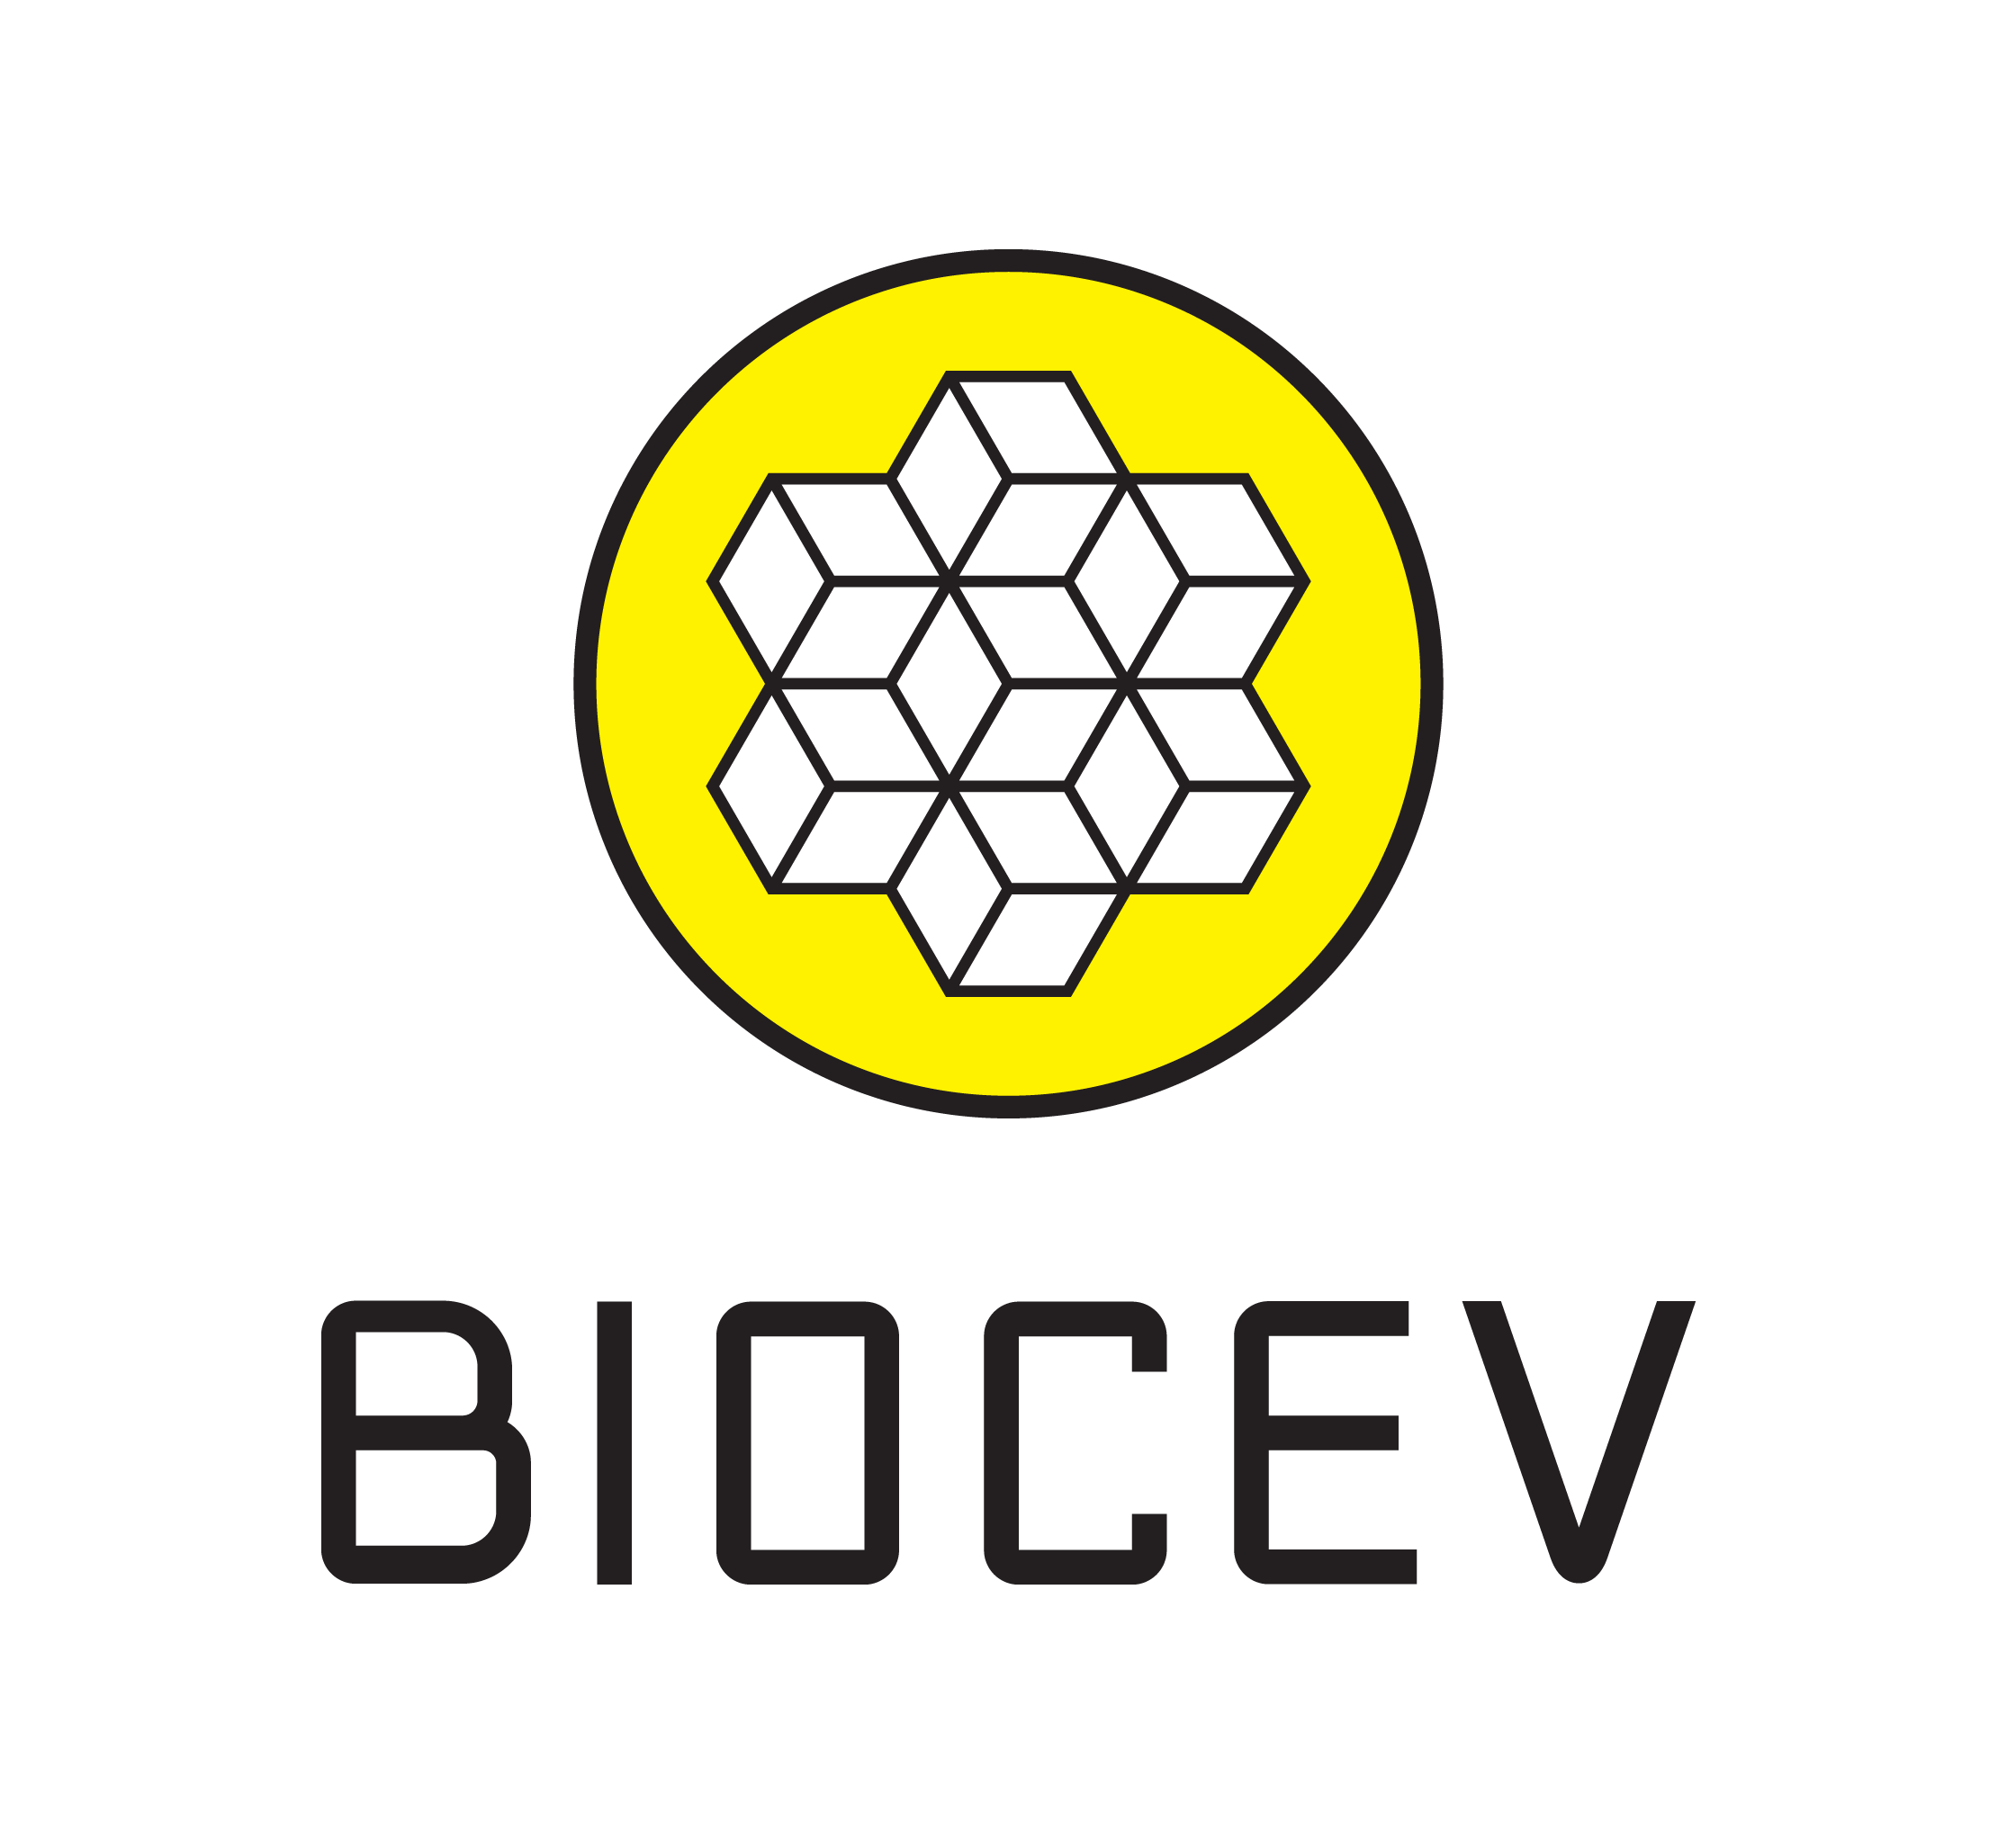 biocev-logo2.png